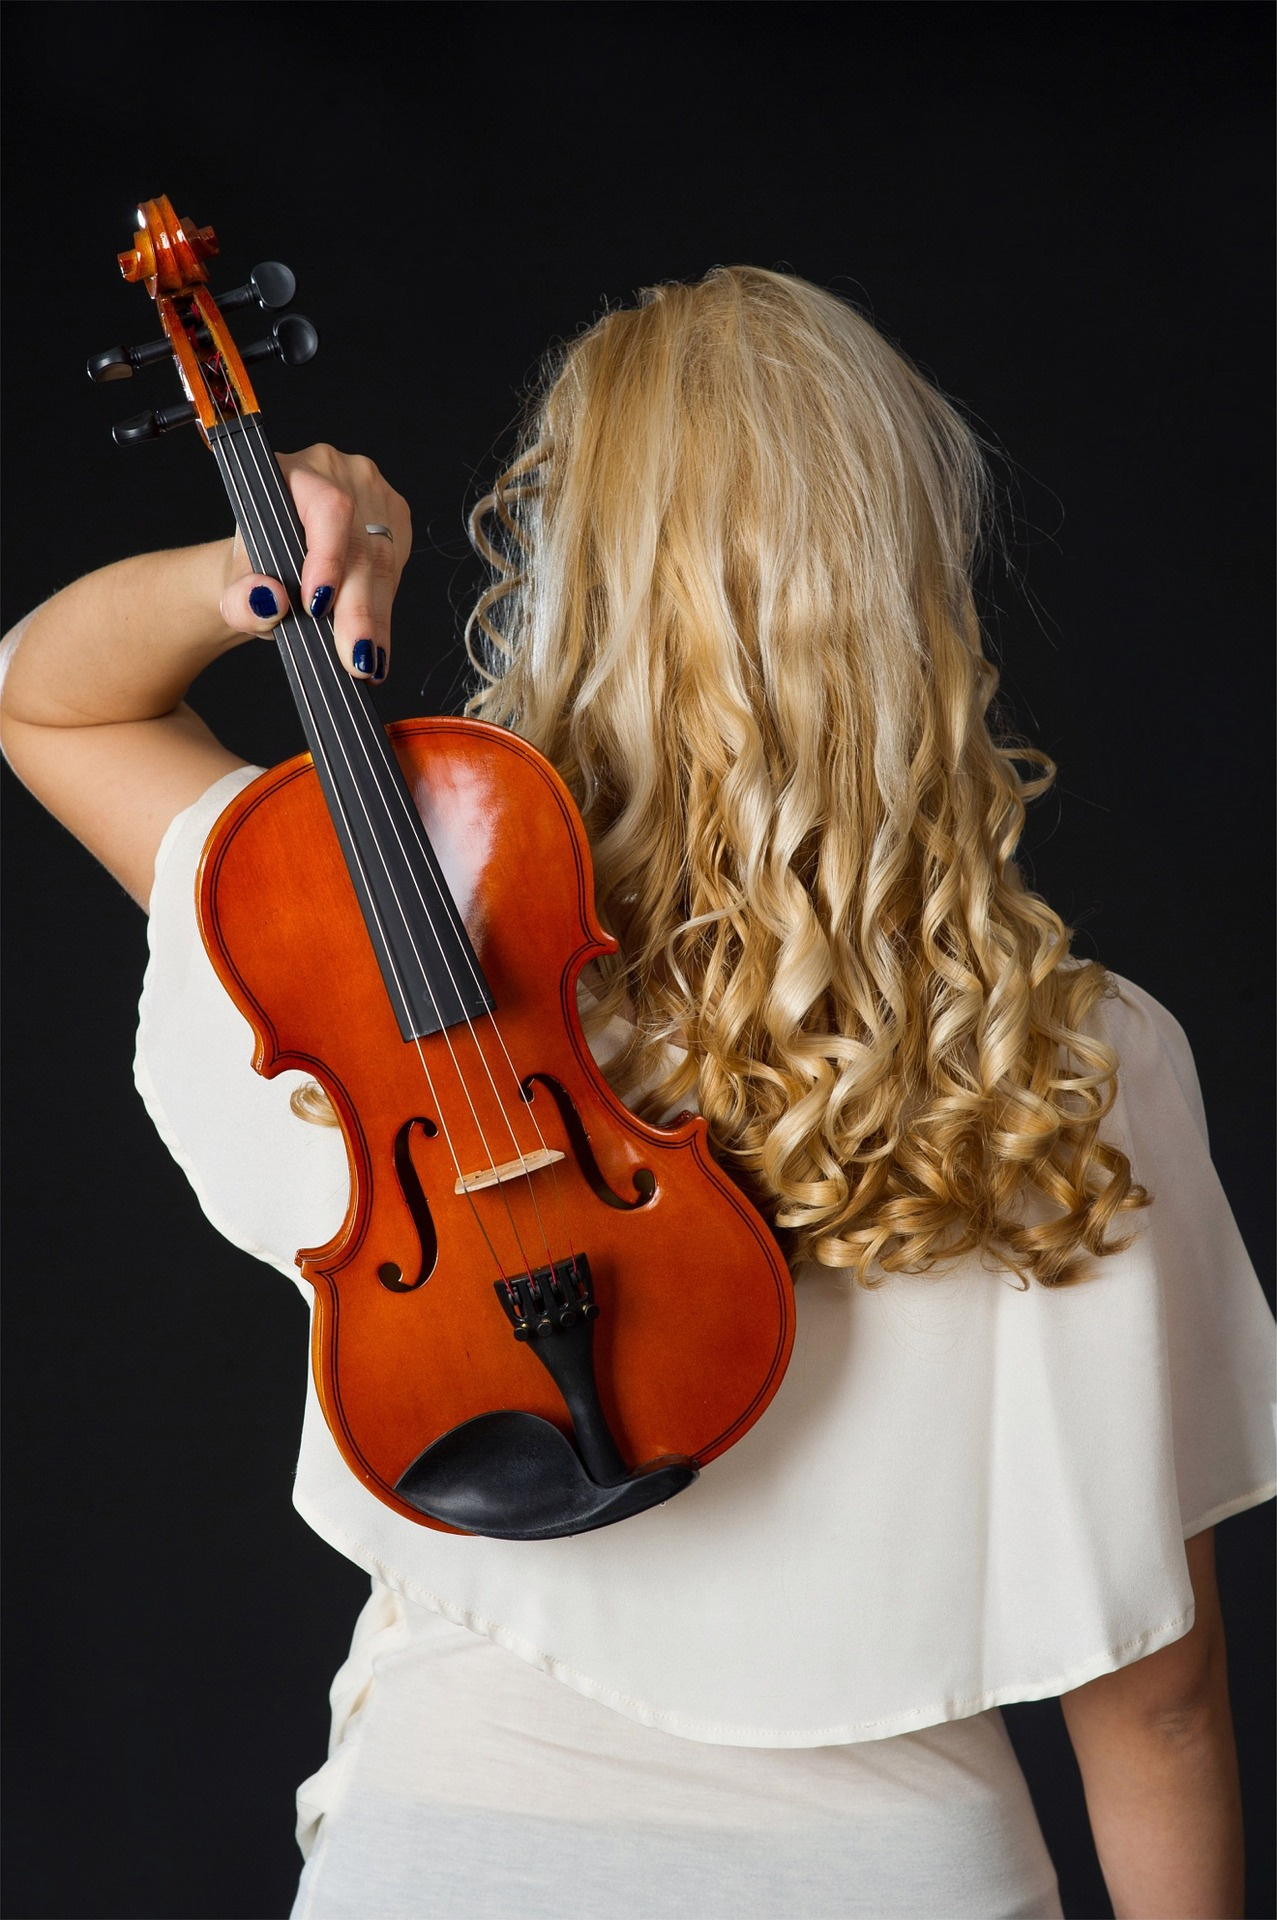 violin-gfa995d543_1920.jpg